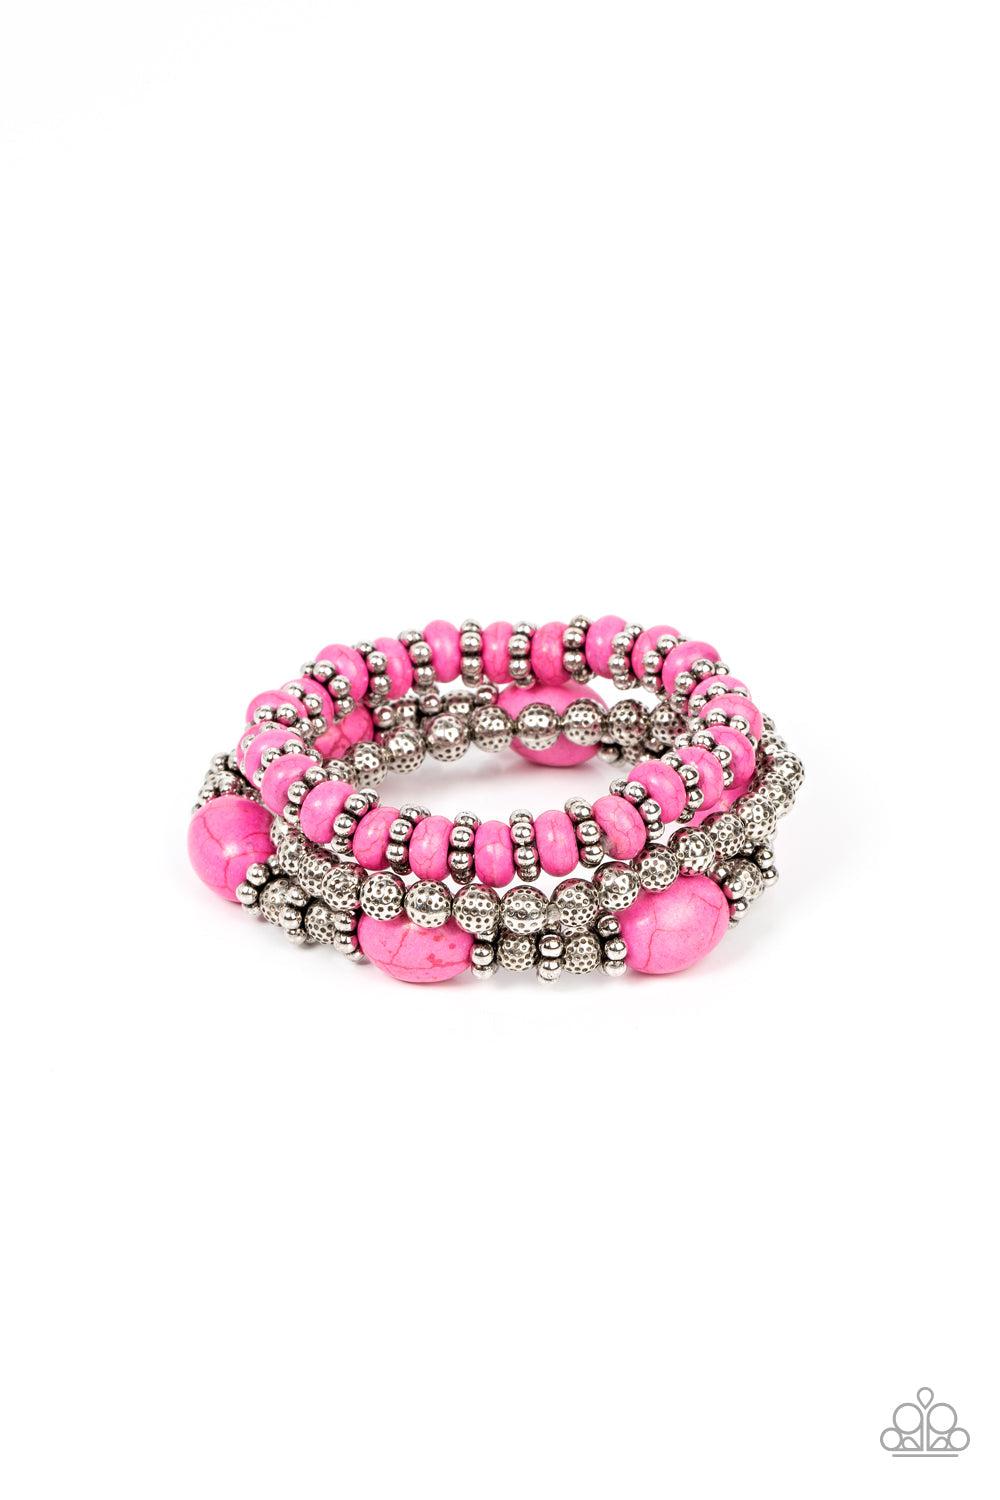 Take by SANDSTORM Pink Stone Bracelet - Paparazzi Accessories- lightbox - CarasShop.com - $5 Jewelry by Cara Jewels